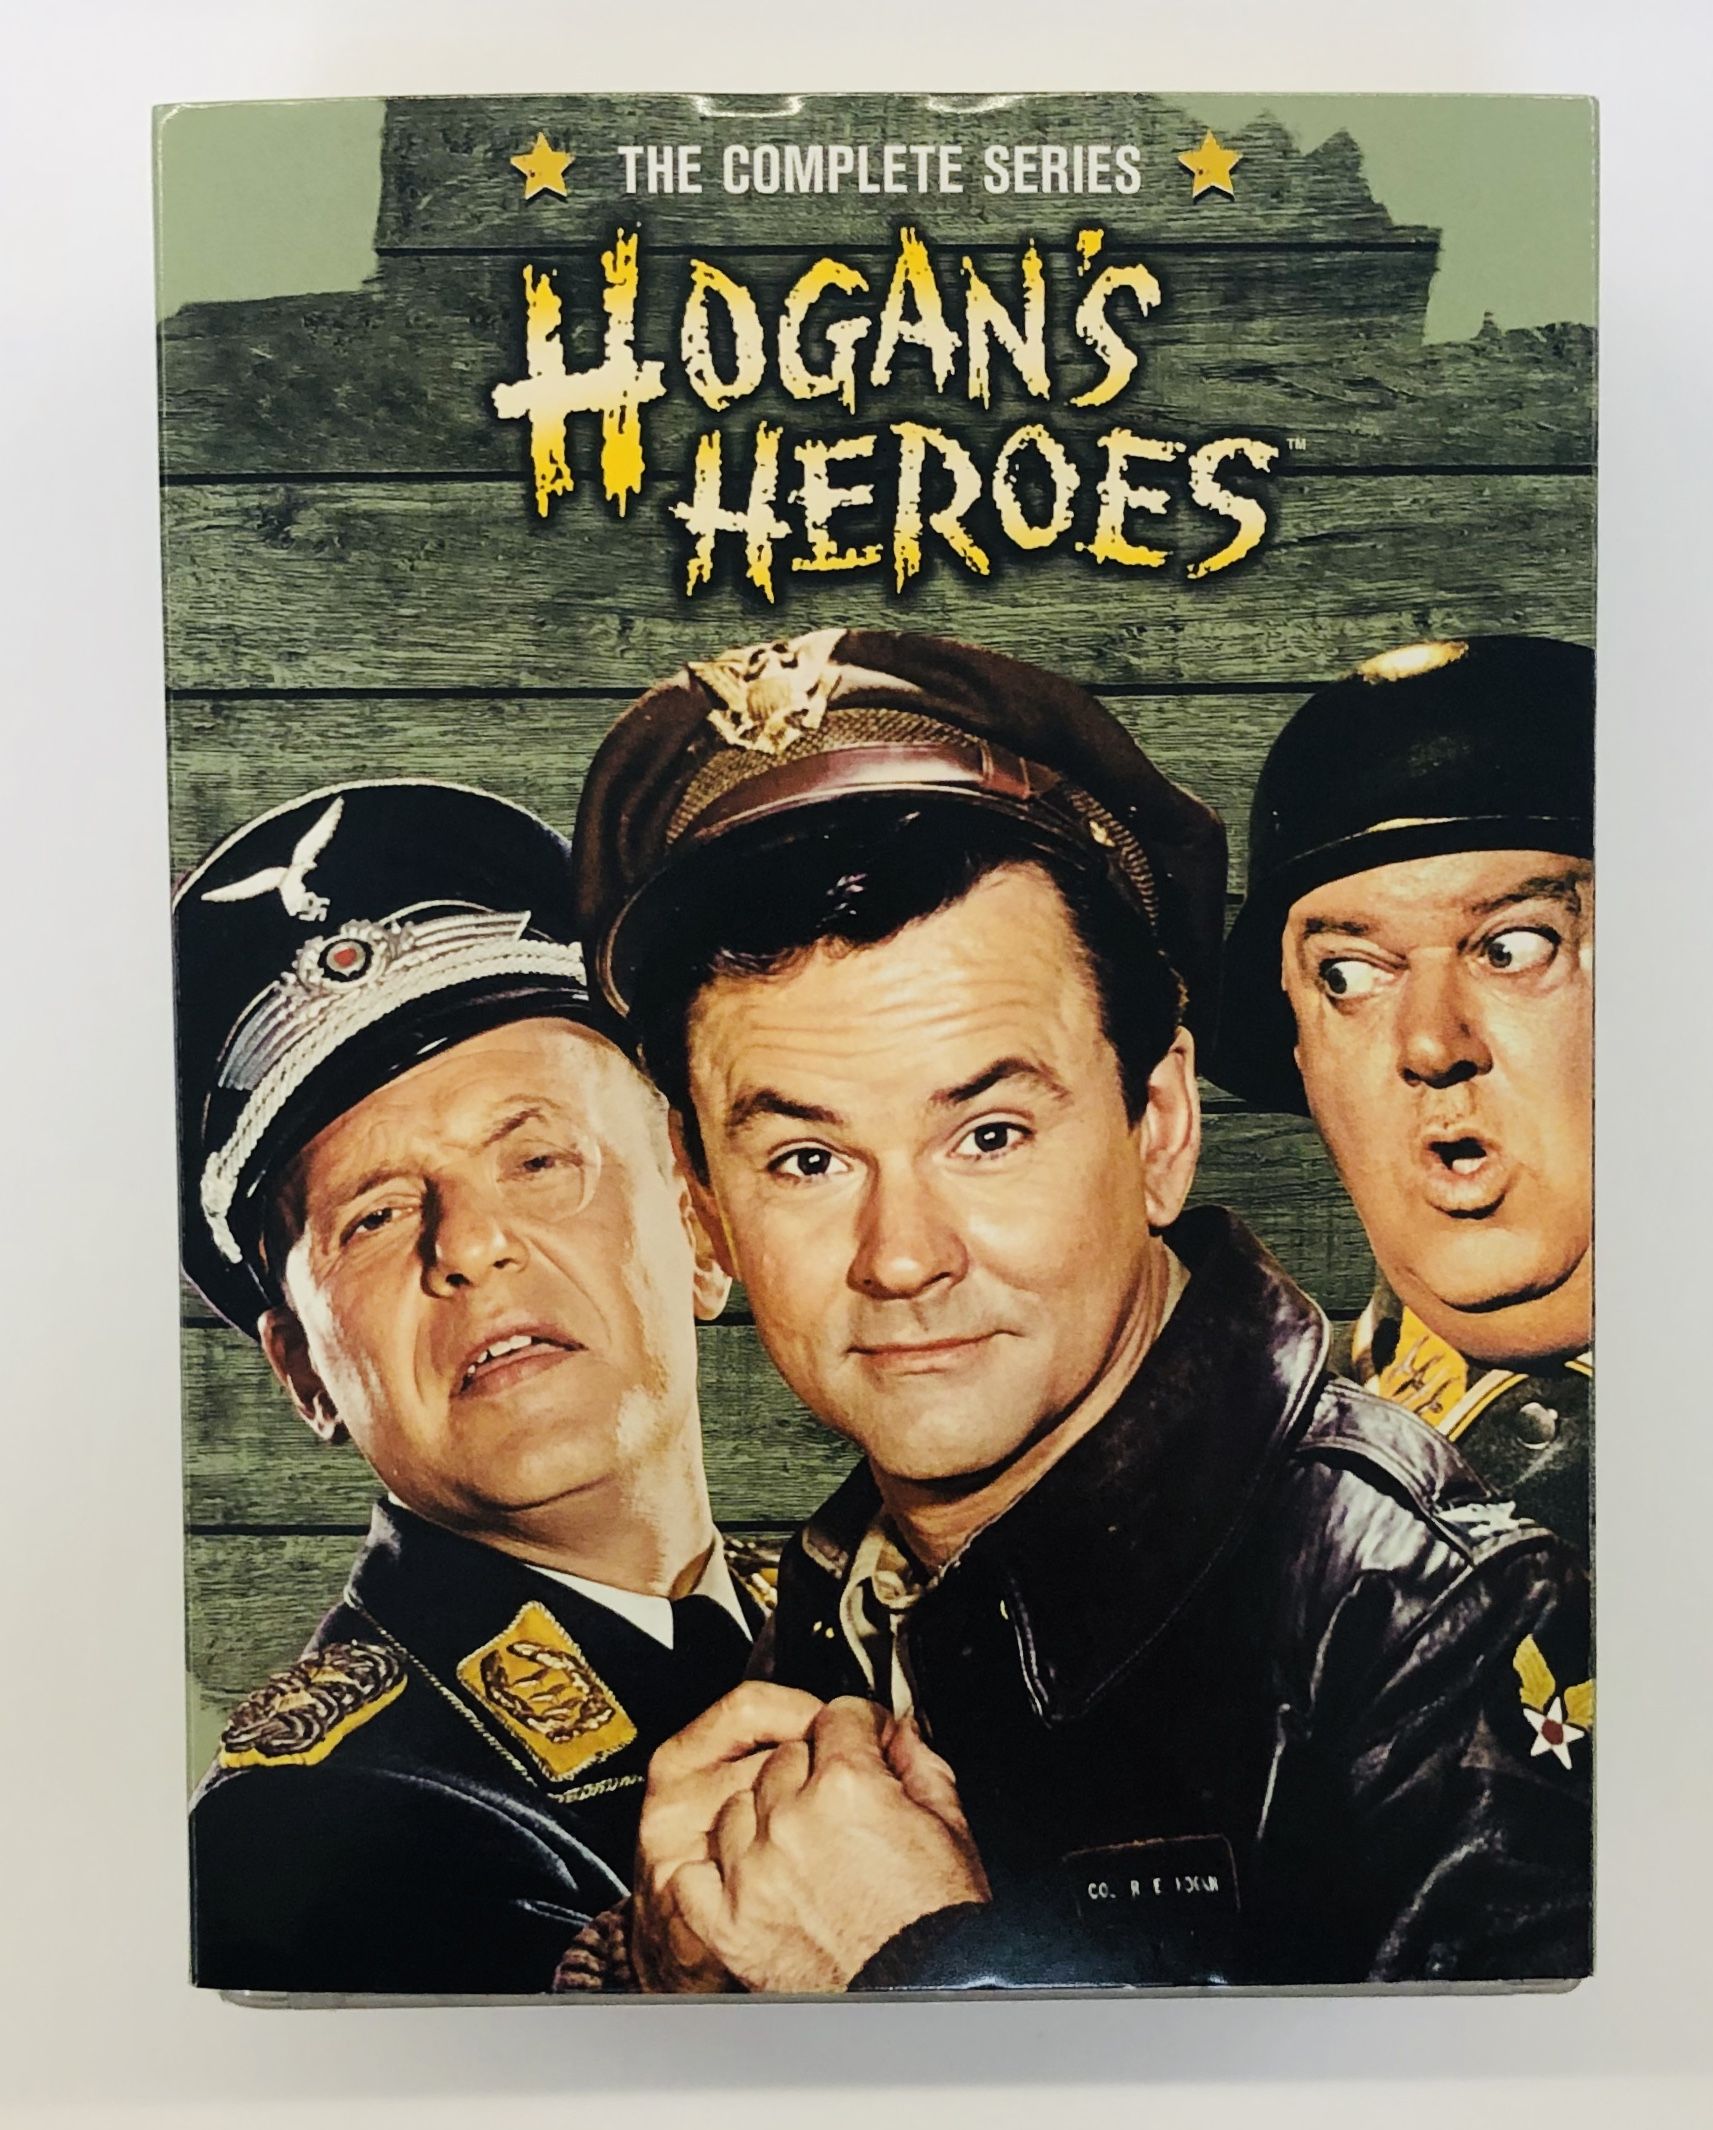 The Hogan's Heroes (DVD)